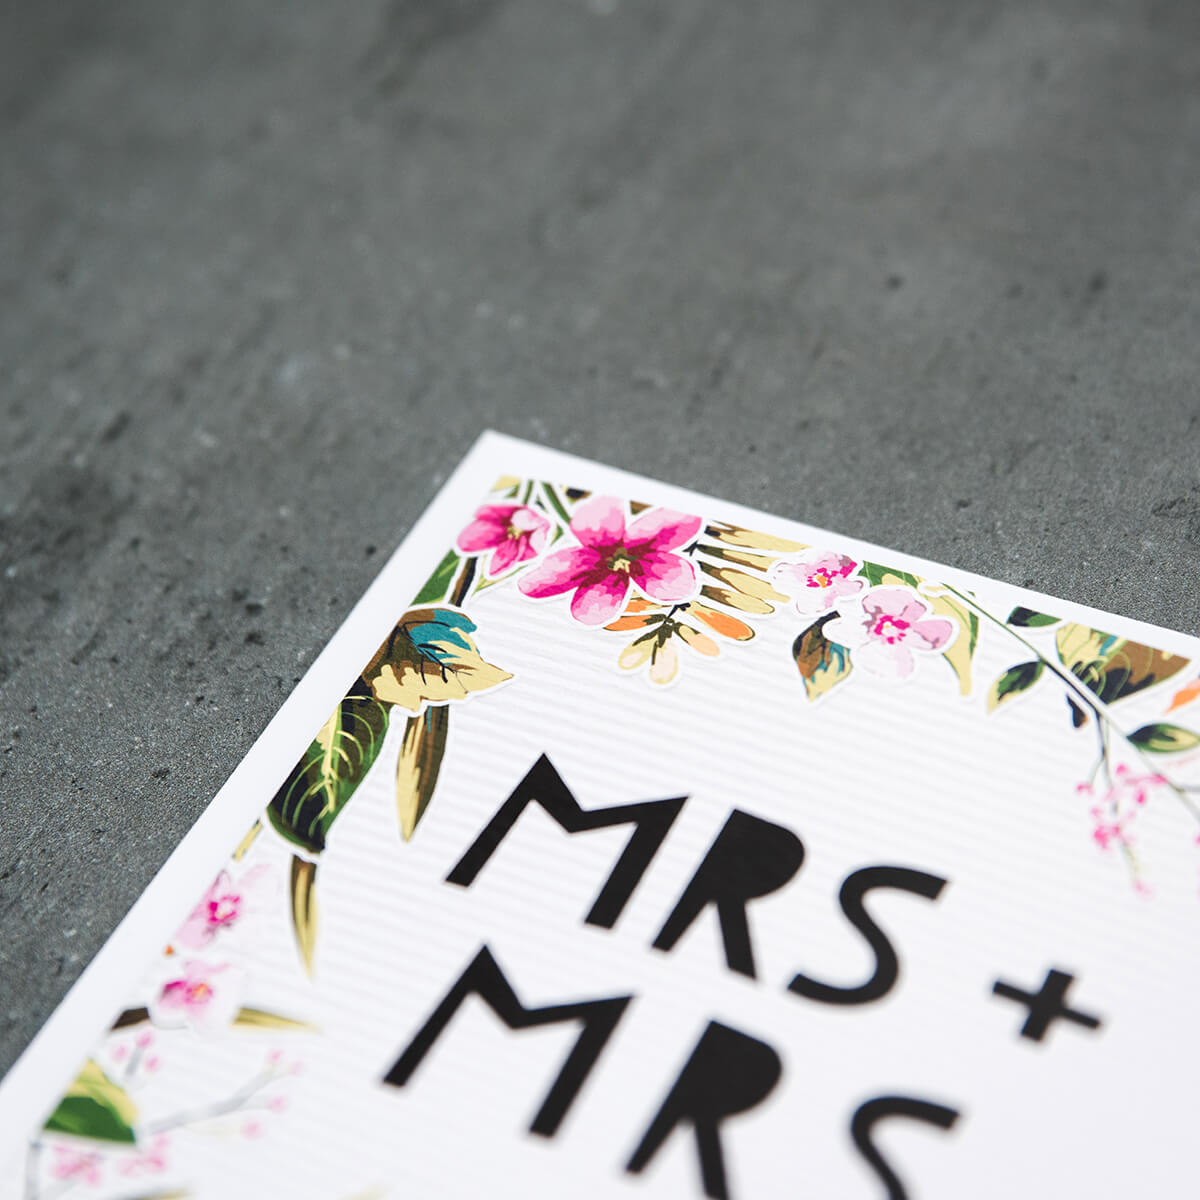 'Mrs + Mrs' Gay Wedding Card - I am Nat Ltd - Greeting Card